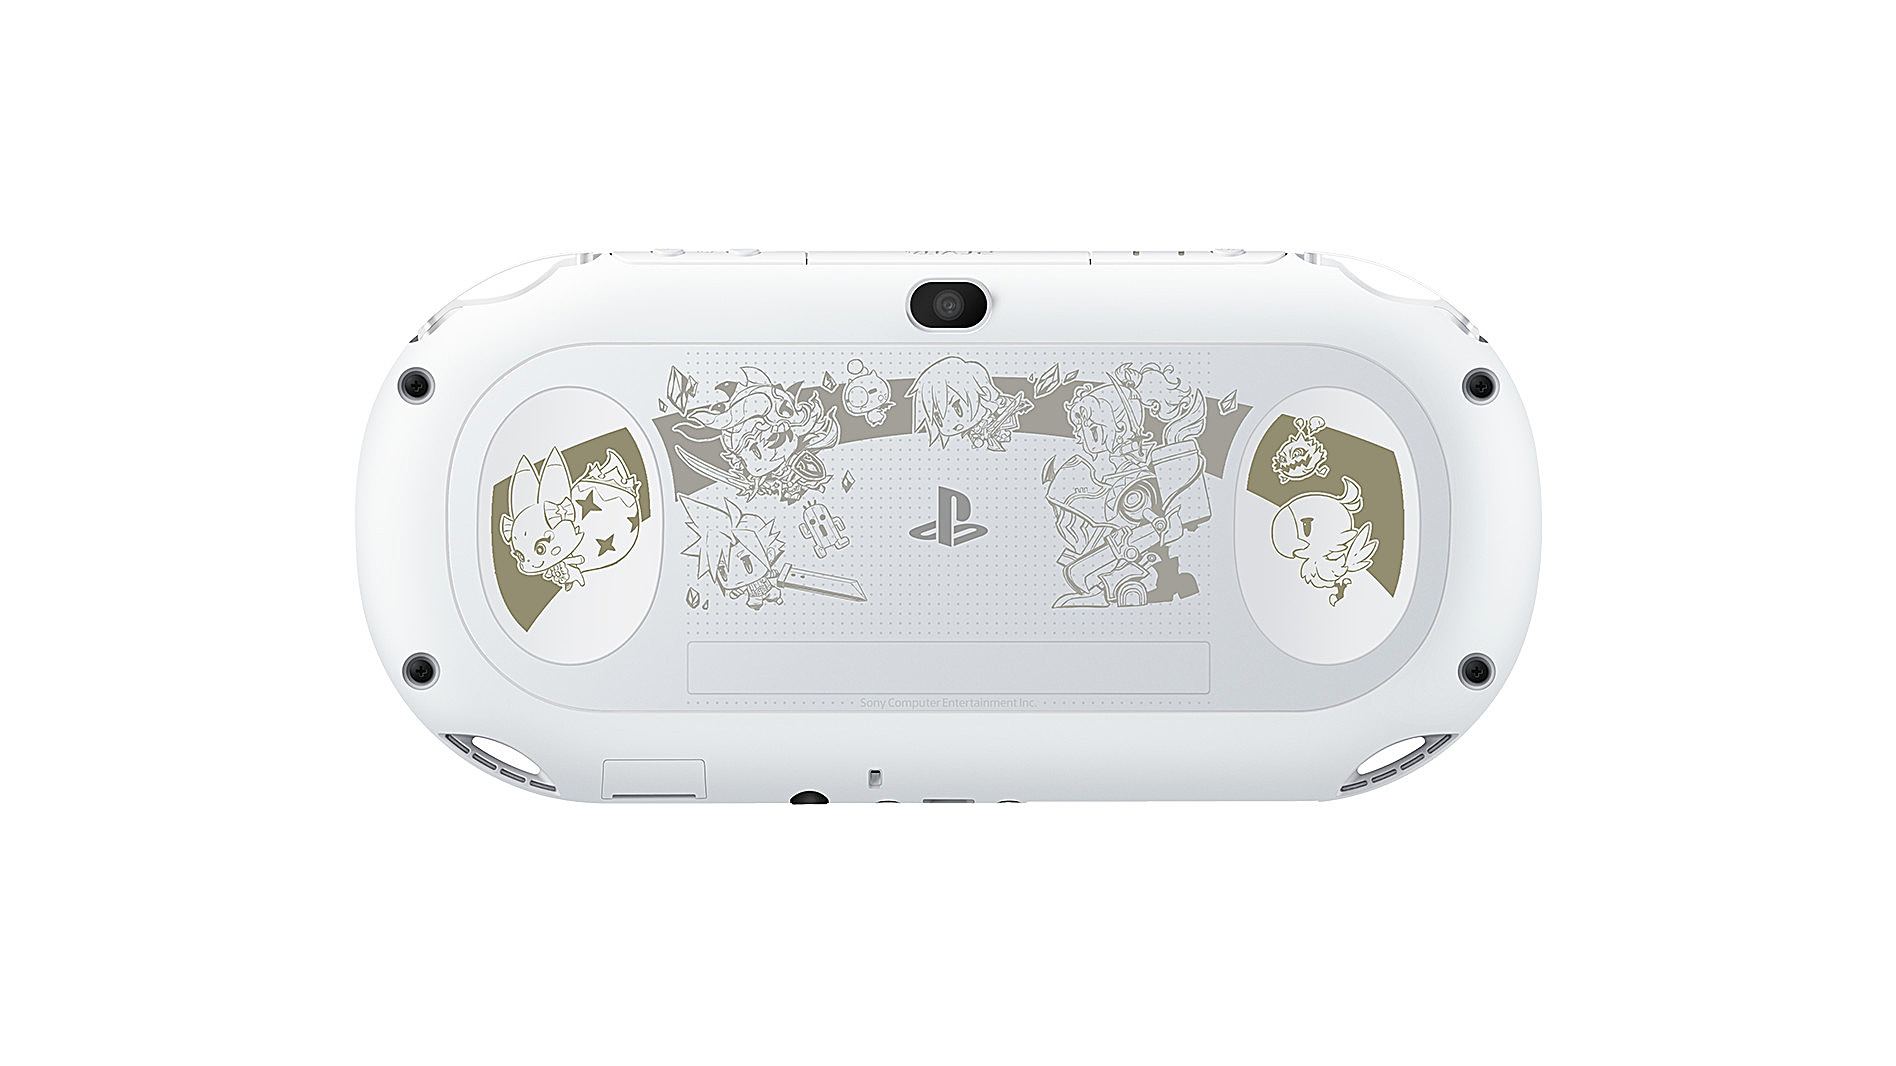 Ps Vita Playstation Vita New Slim Model Pch 00 World Of Final Fantasy Primero Edition White